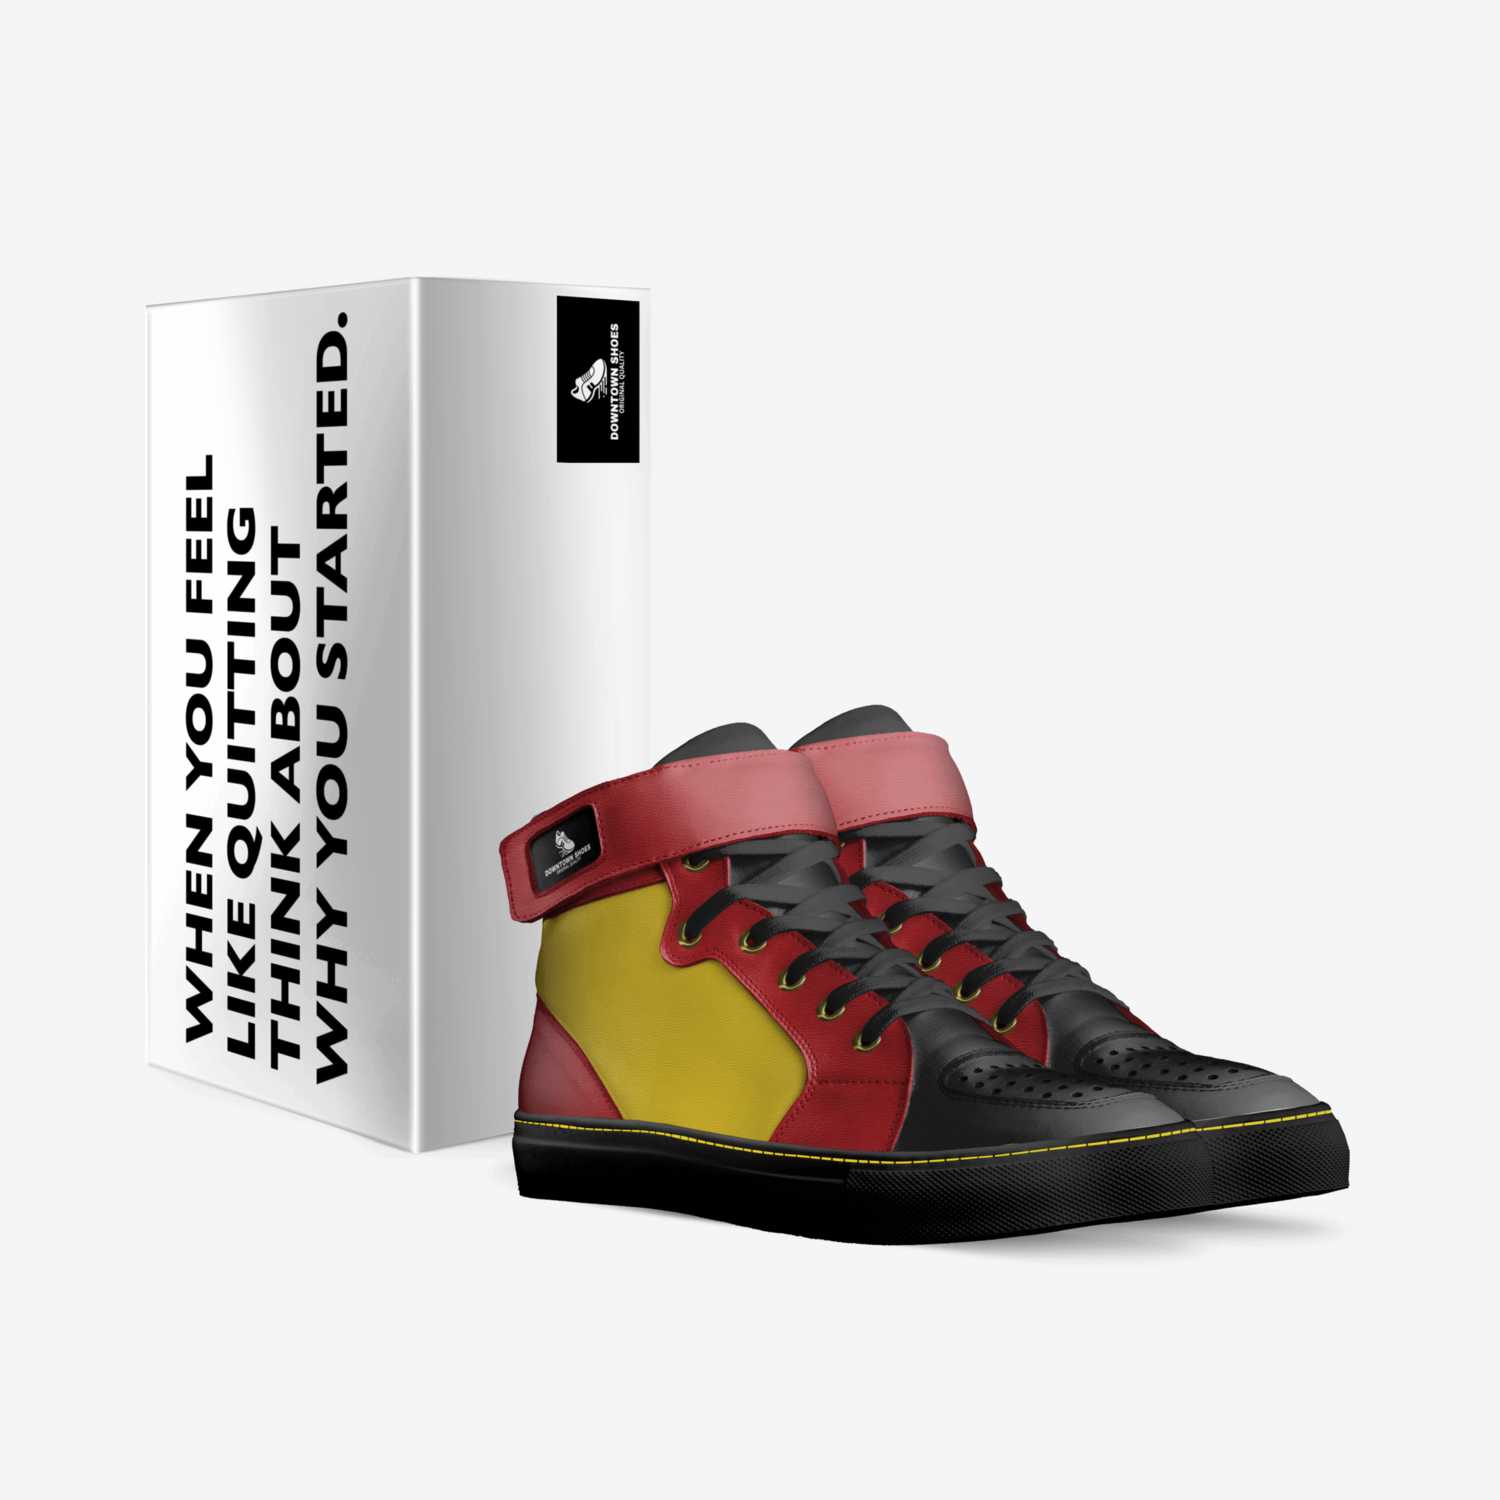 Cobra custom made in Italy shoes by Joshua Stuart | Box view